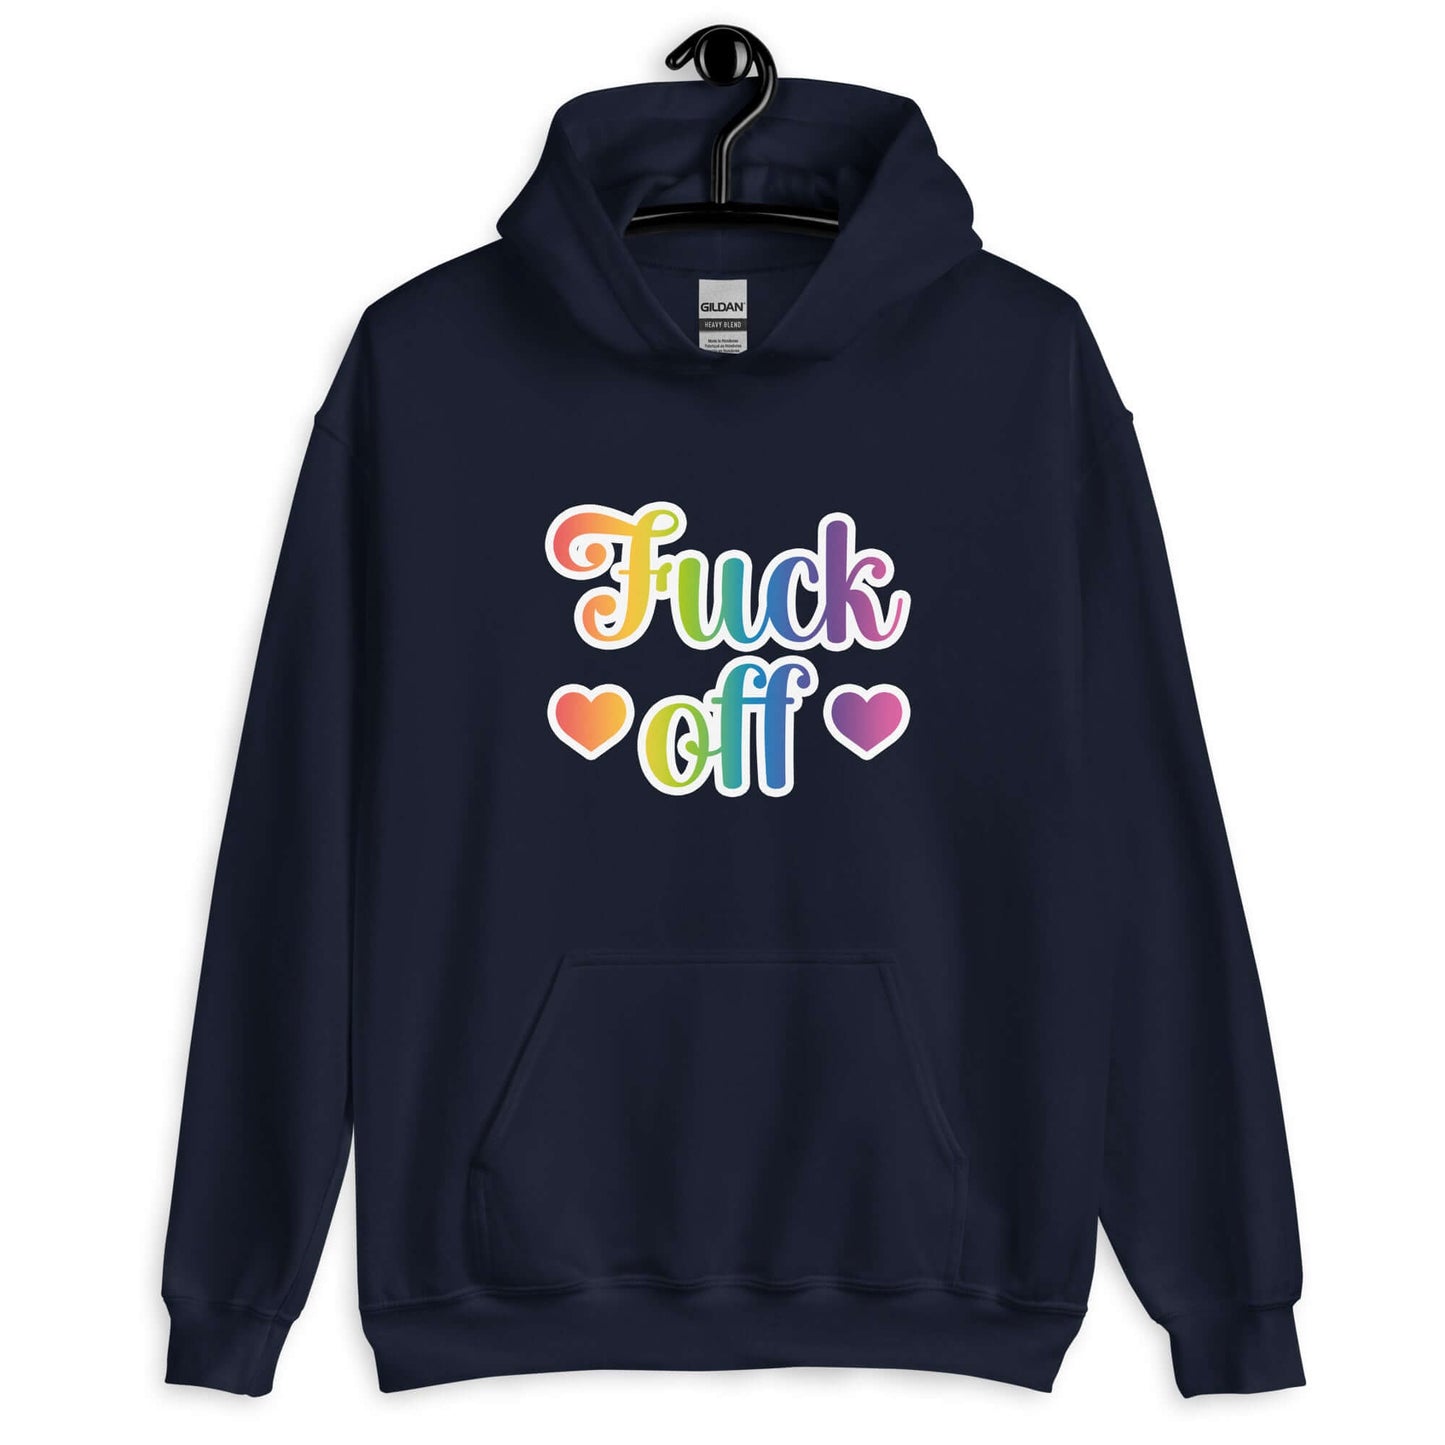 F off hoodie sweatshirt. 80's rainbow font style